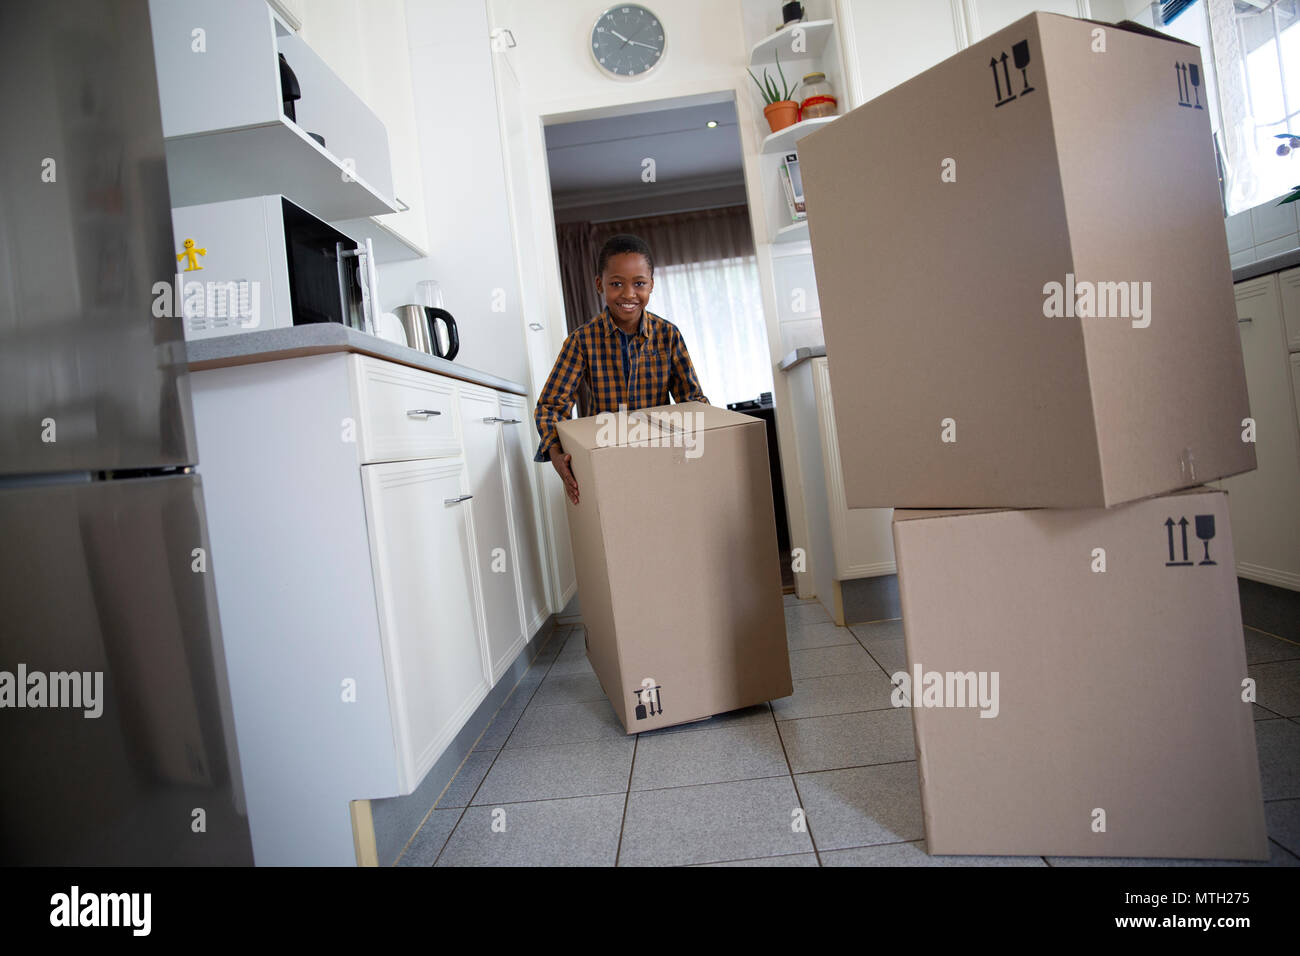 Boy moving boxes into kitchen Stock Photo